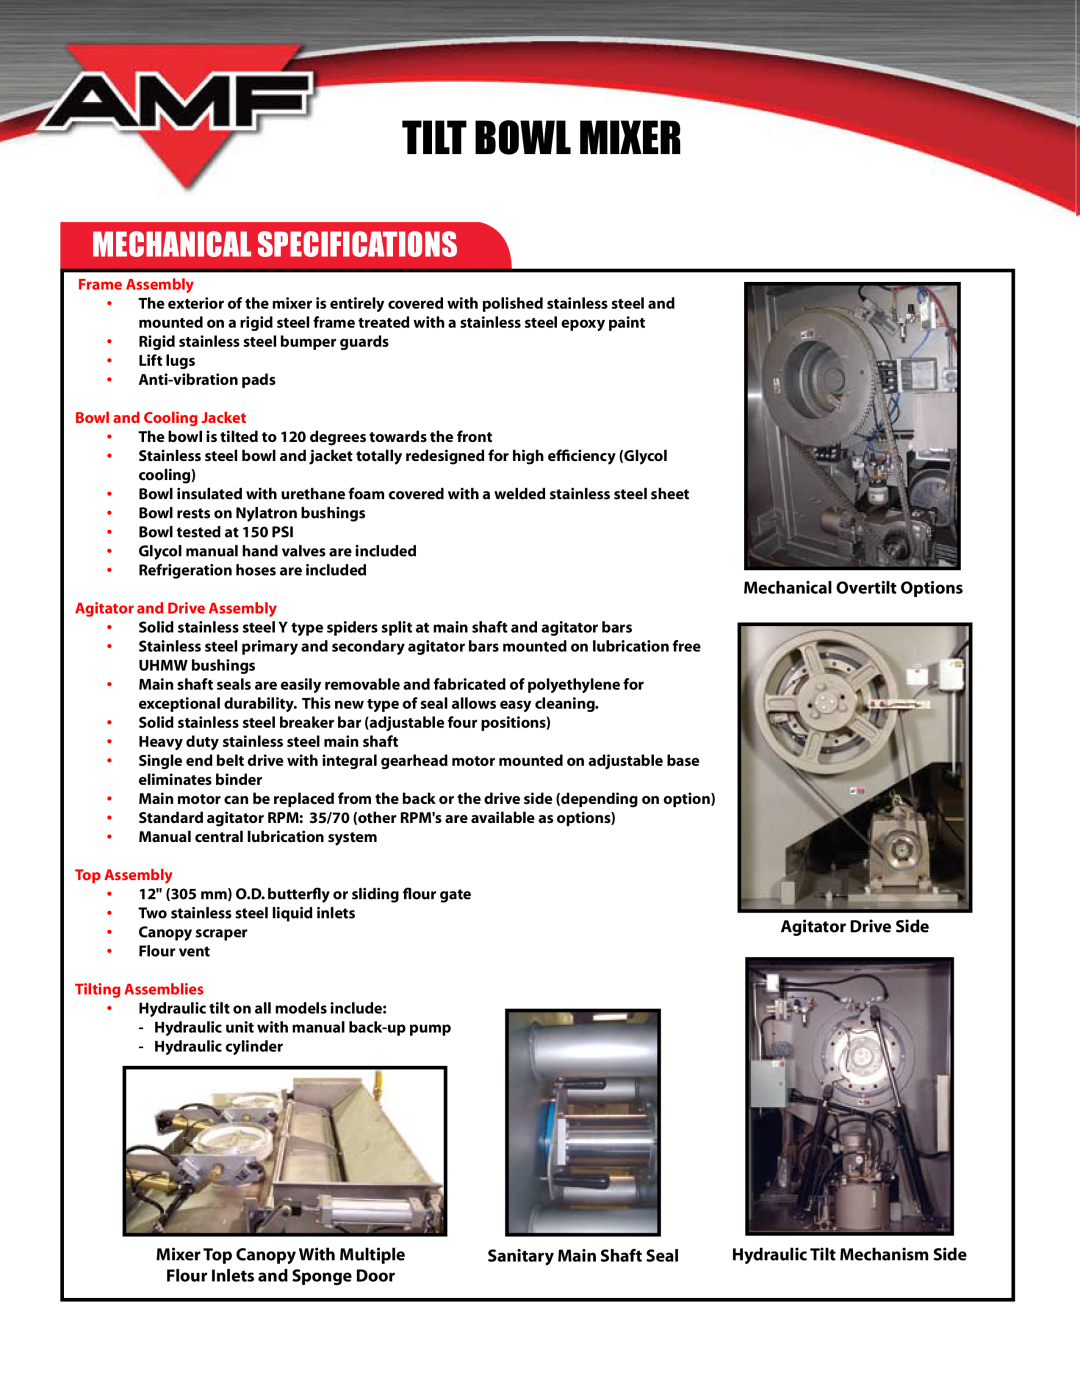 AMF TILT Bowl Mixer (TBM) manual Tilt Bowl Mixer, Mechanical Specifications, Frame Assembly, Bowl and Cooling Jacket 